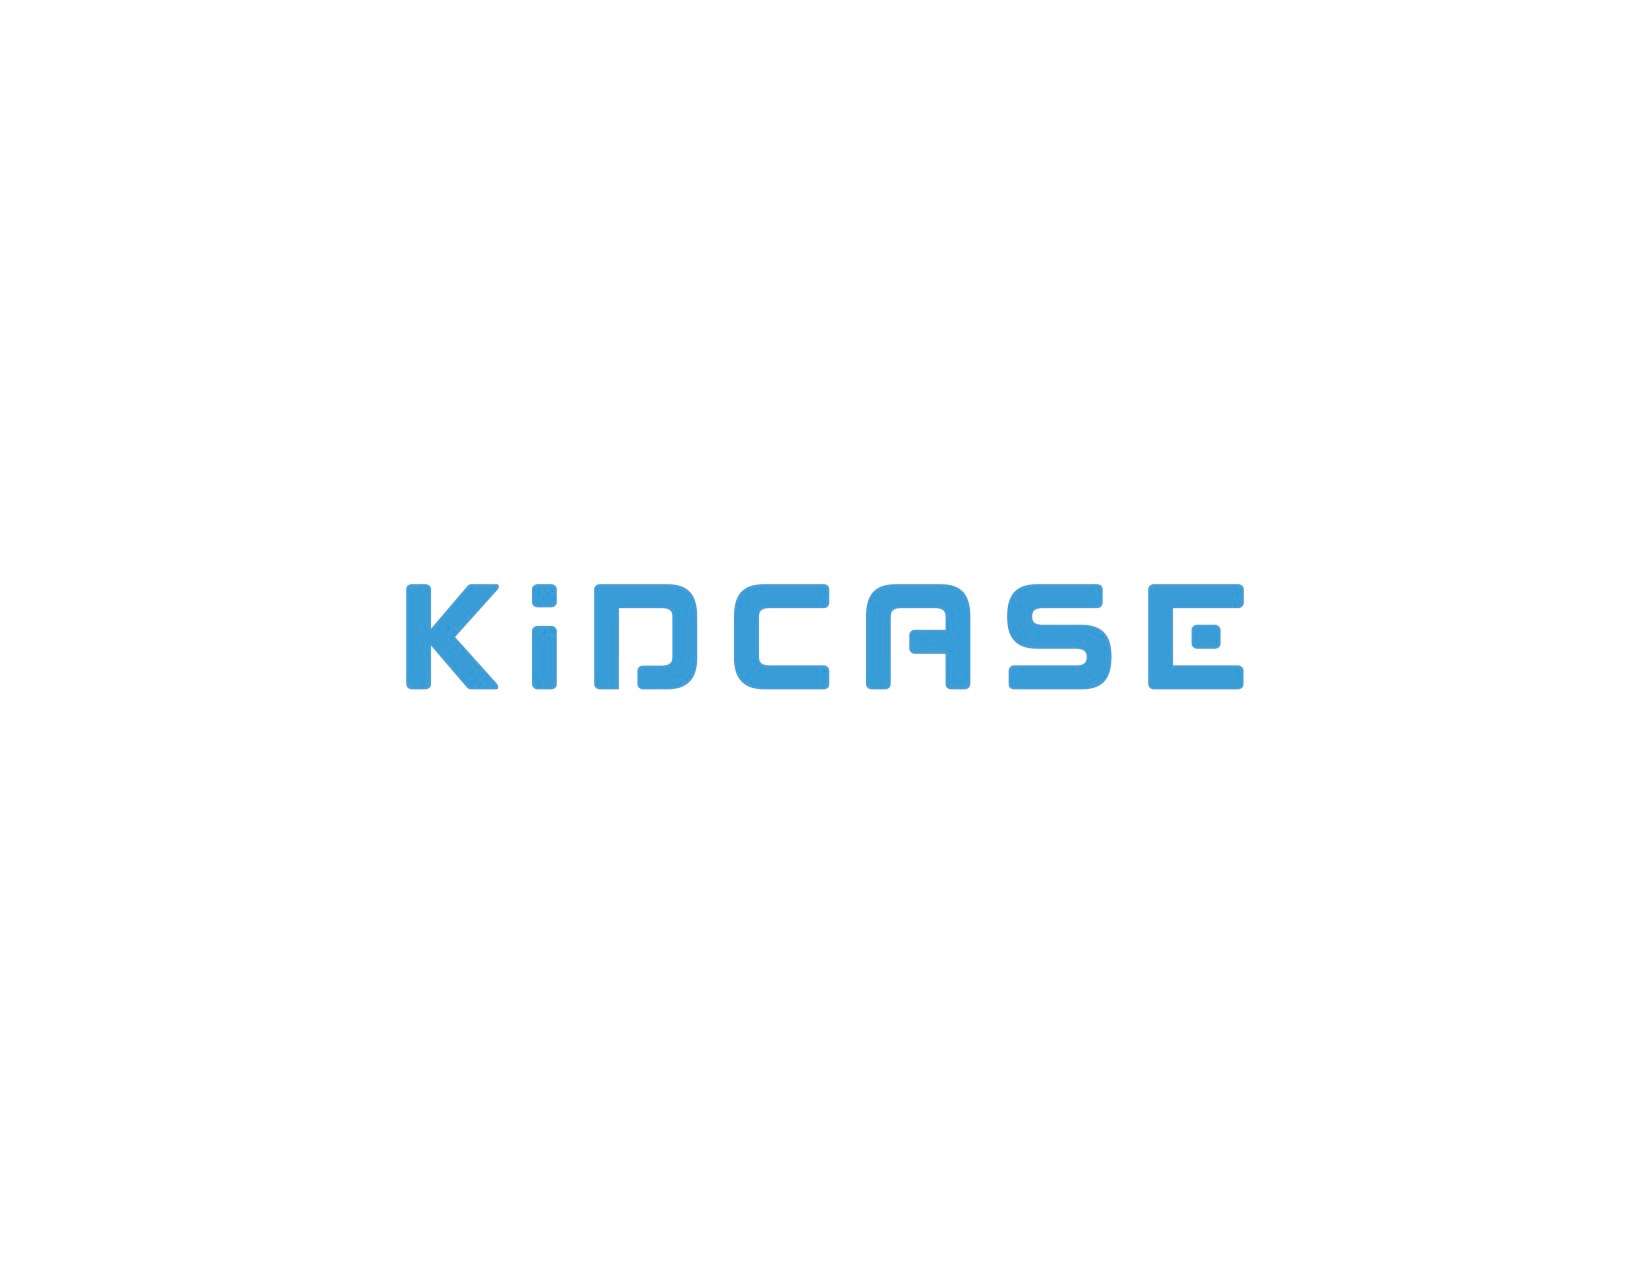 Kids.Poki.com is certified by the kidSAFE Seal Program